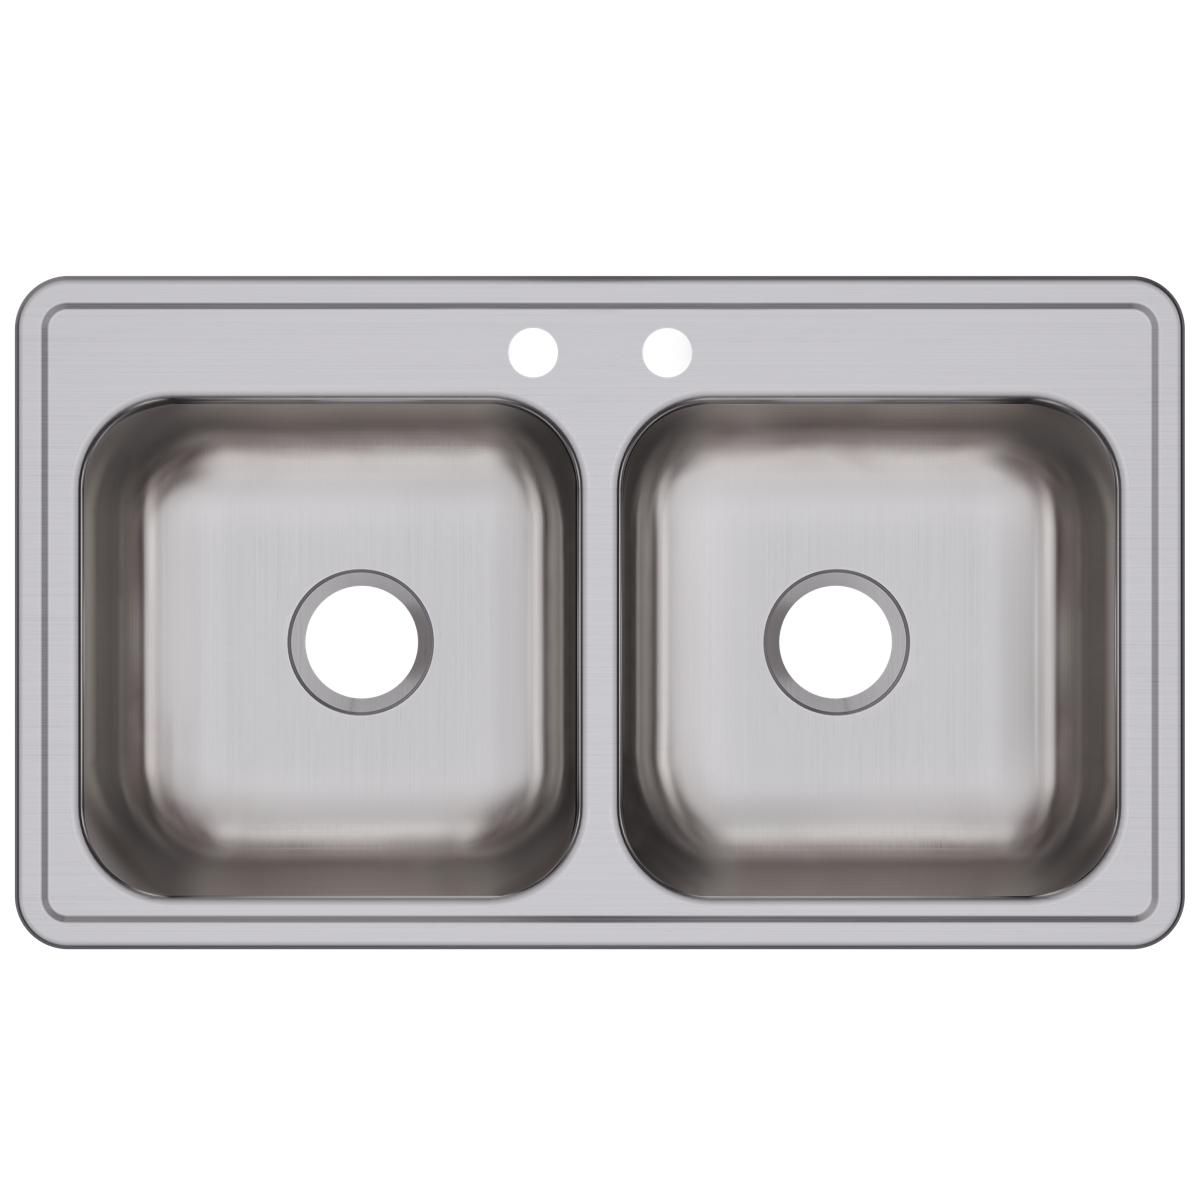 Elkay Dayton 33" x 19" x 8" Stainless Steel Equal Double Bowl Drop-in Sink